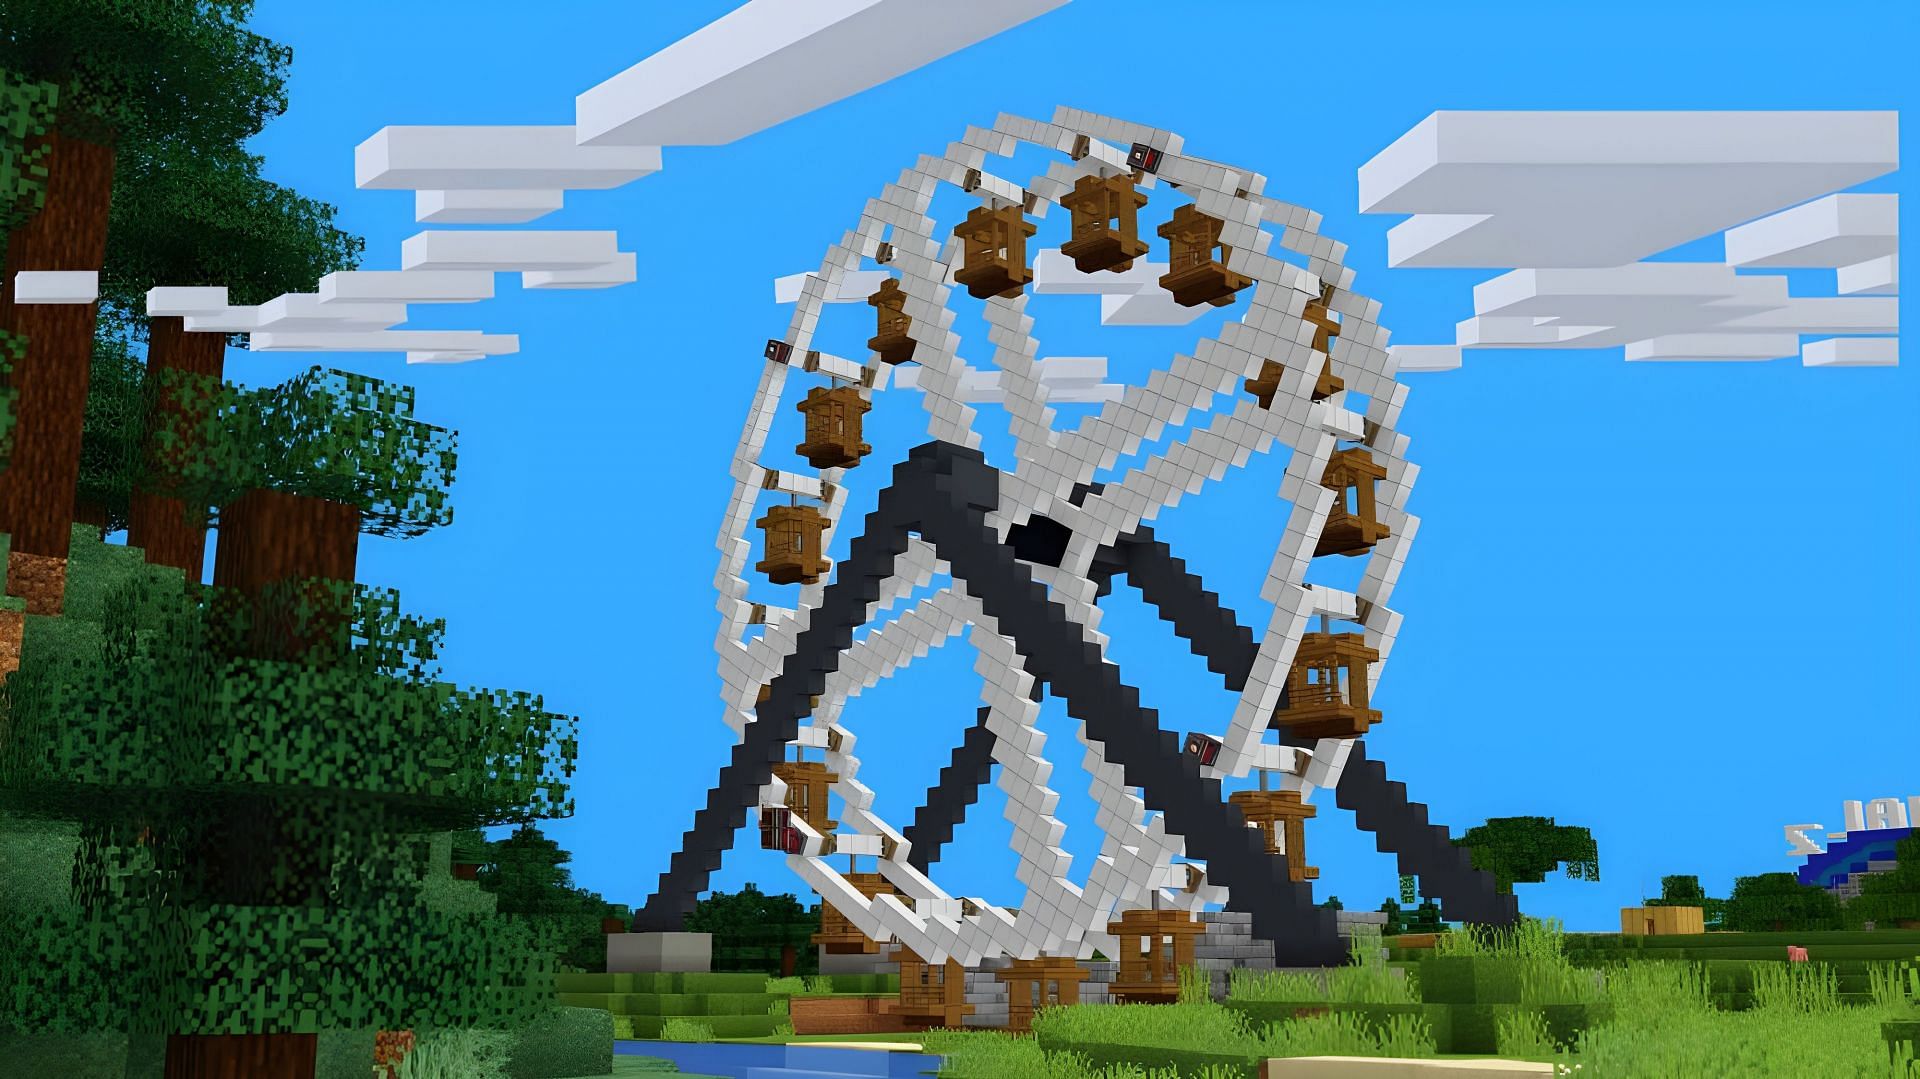 The Simple Working Ferris Wheel (Image via Youtube/Shalz)